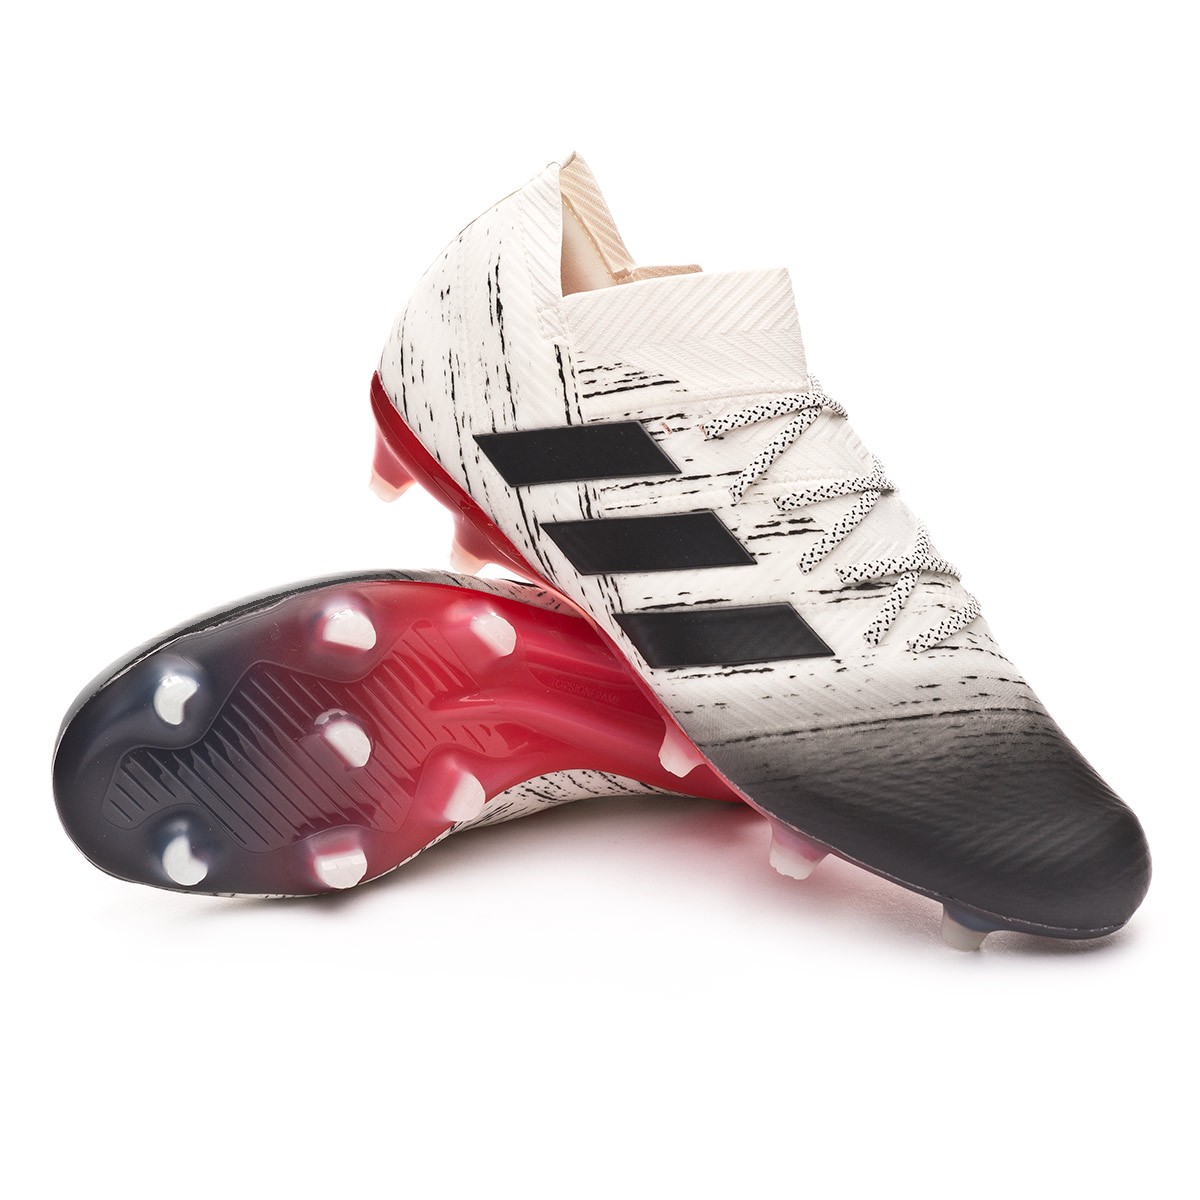 Football Boots adidas Nemeziz 18.1 FG Off white-Core black-Active red -  Football store Fútbol Emotion